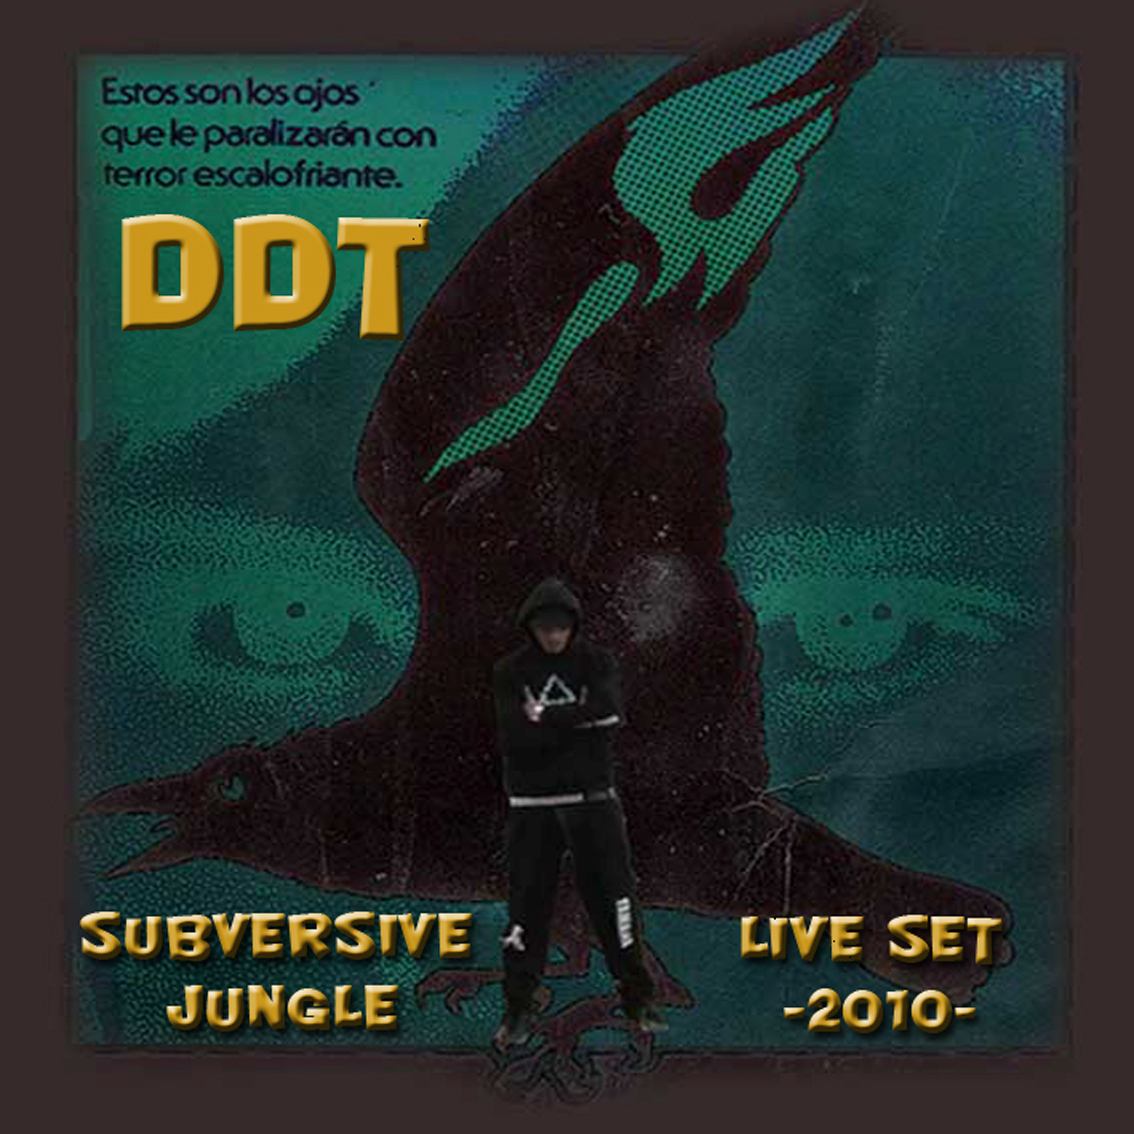 DOWNLOAD-Subversive Jungle Live Set 2010-CCR 015